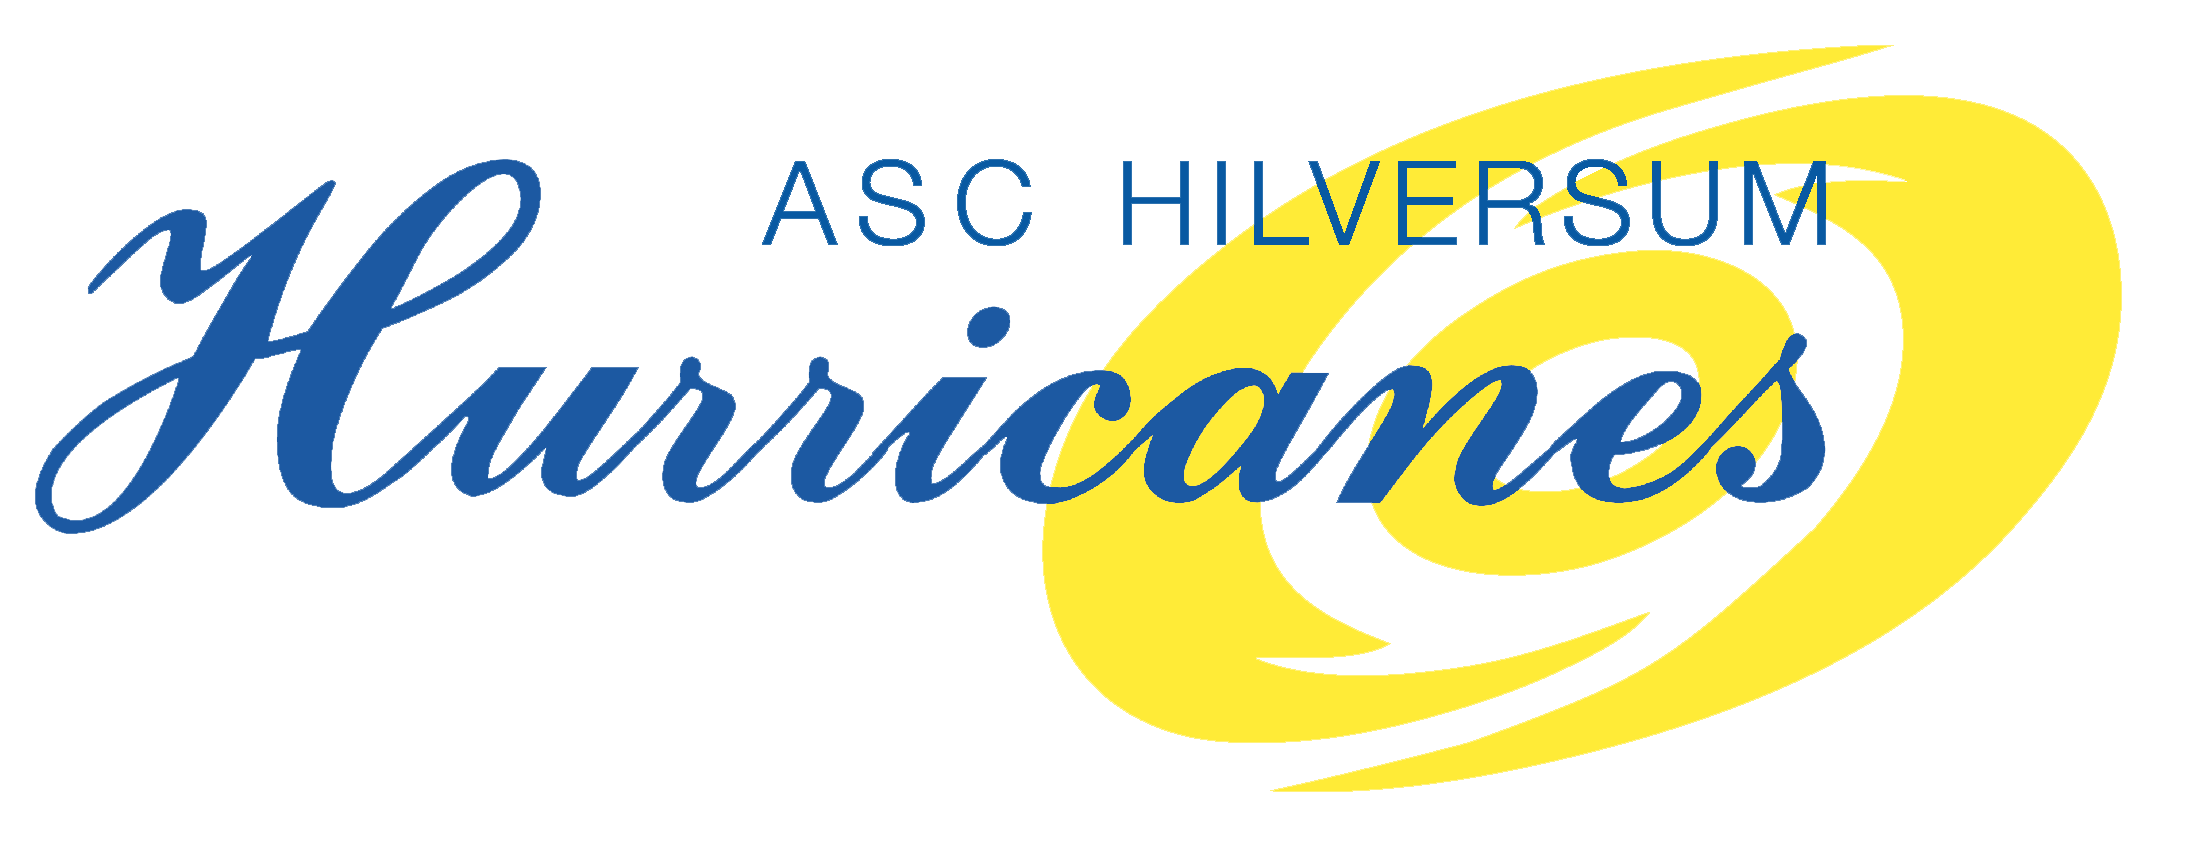 ASC Hilversum Hurricanes